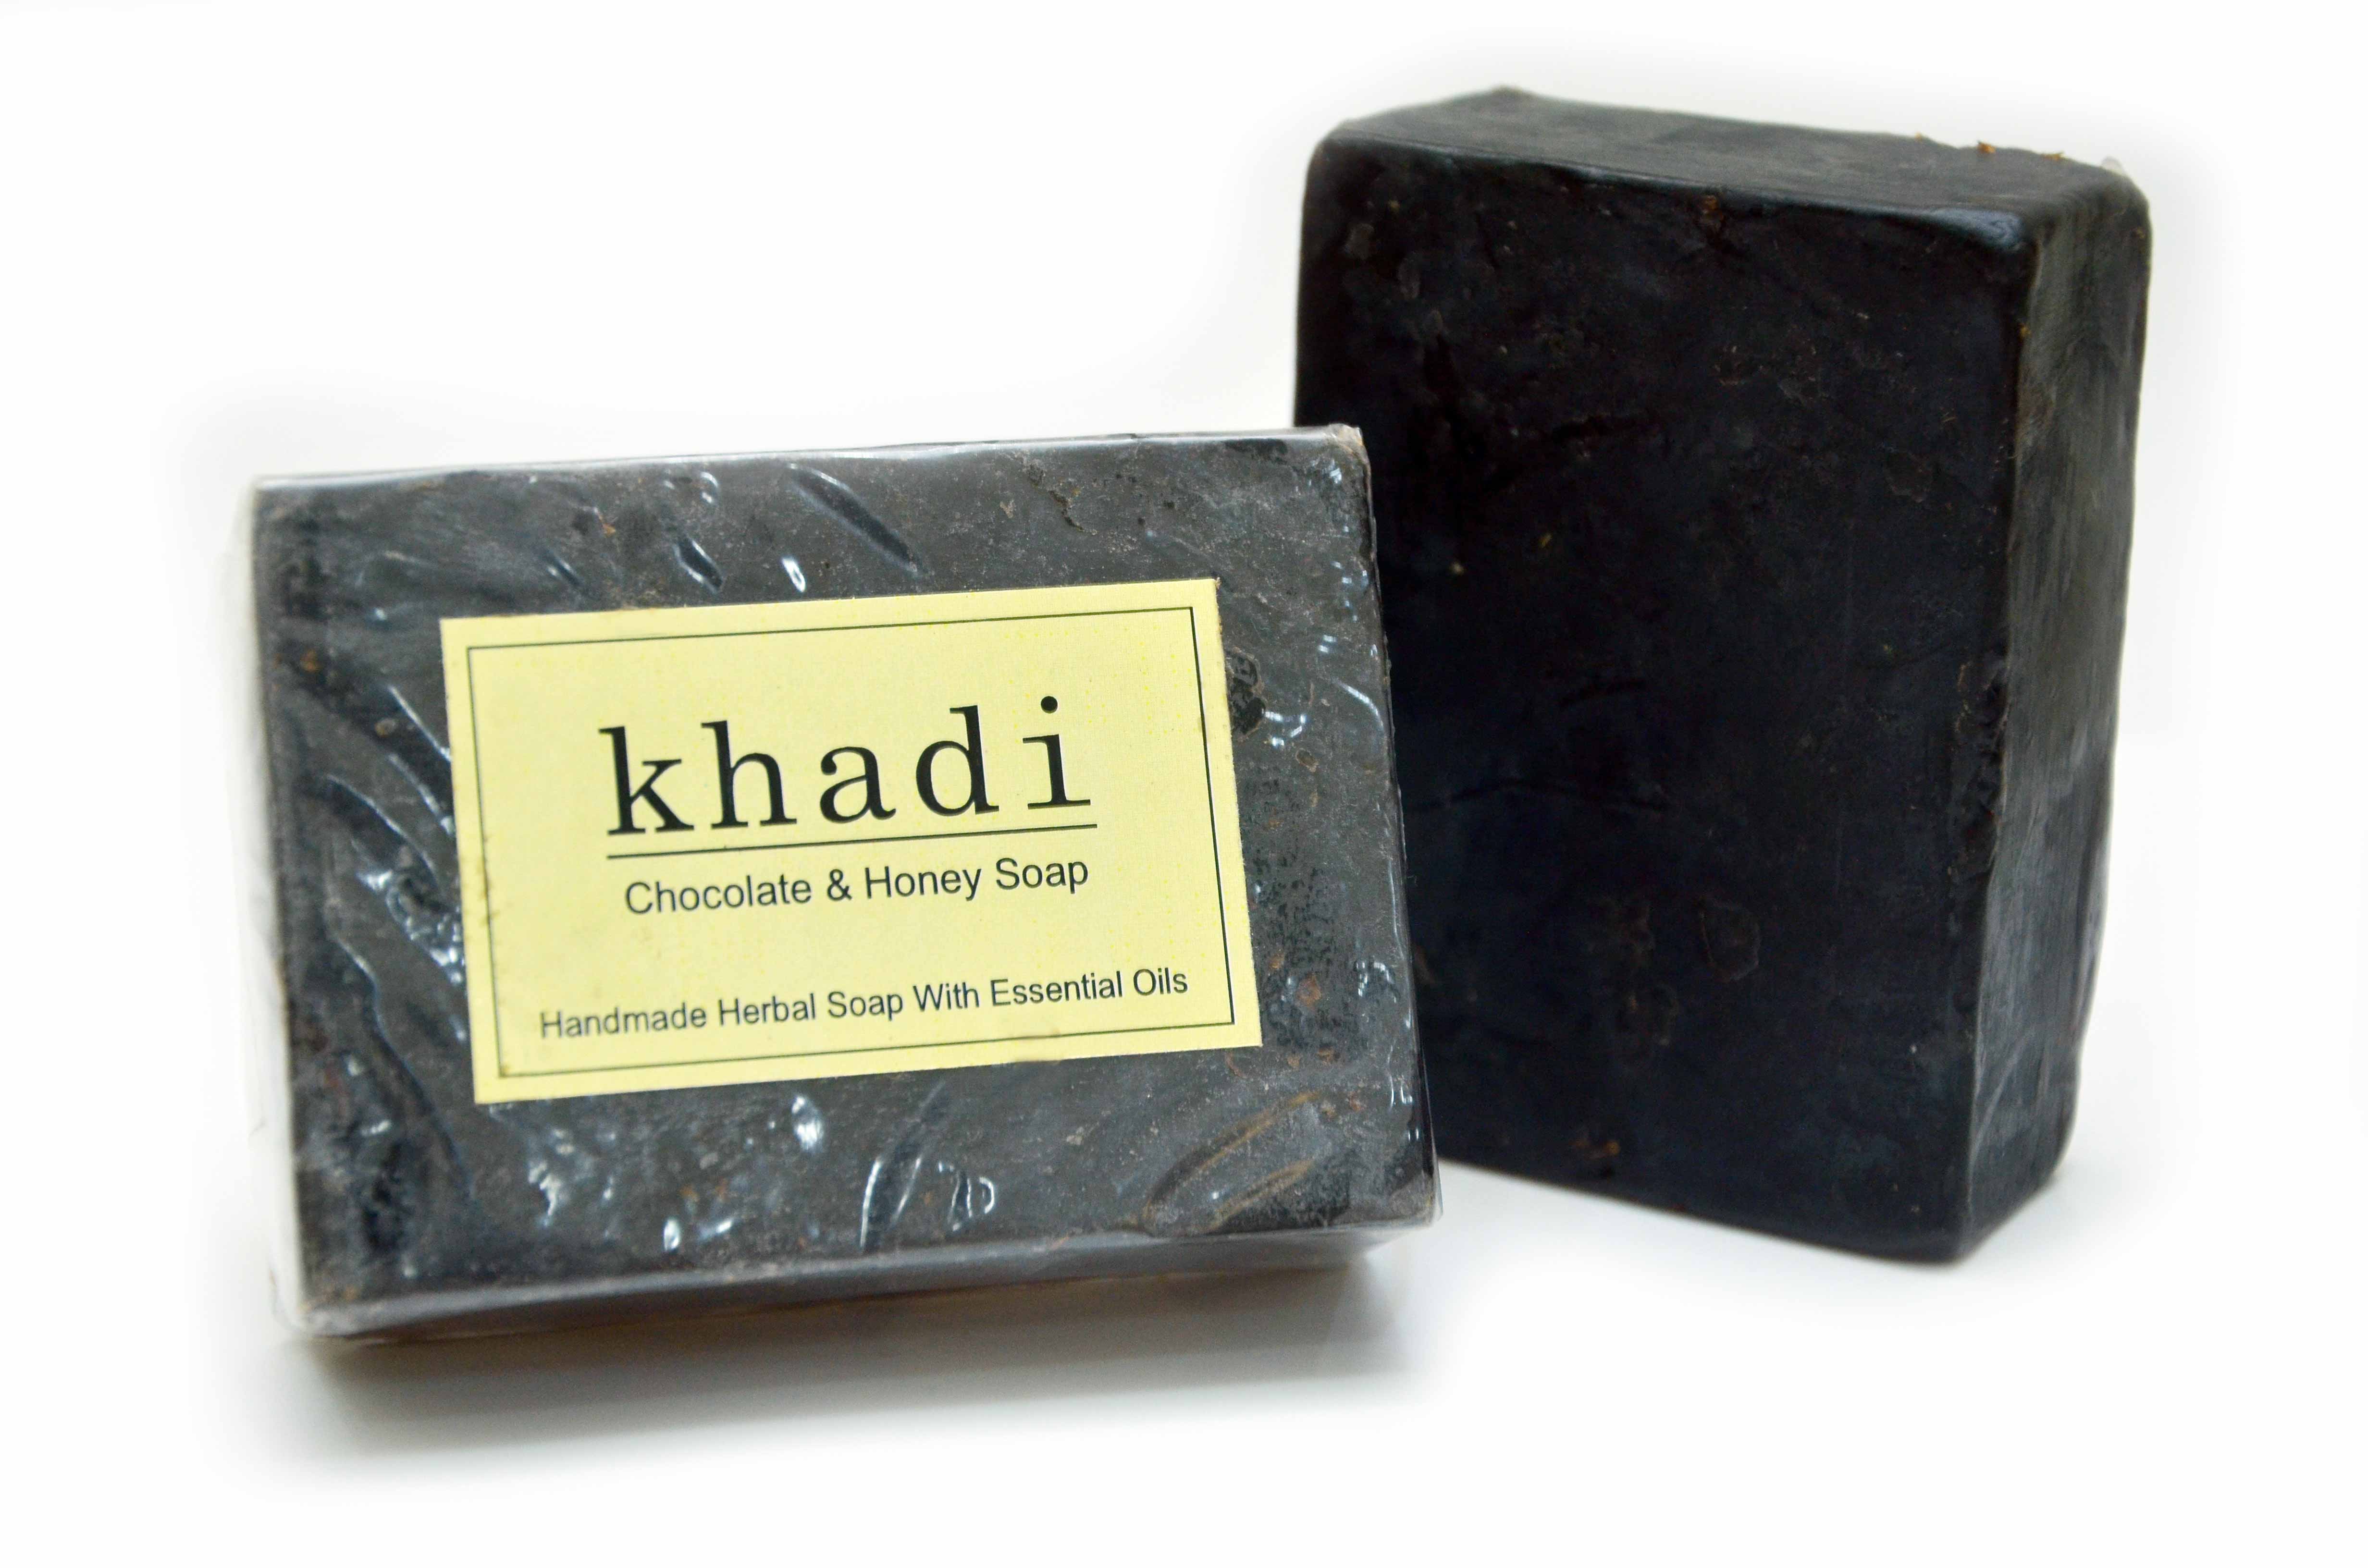 Buy Vagad's Khadi Chocolate And Honey Soap at Best Price Online